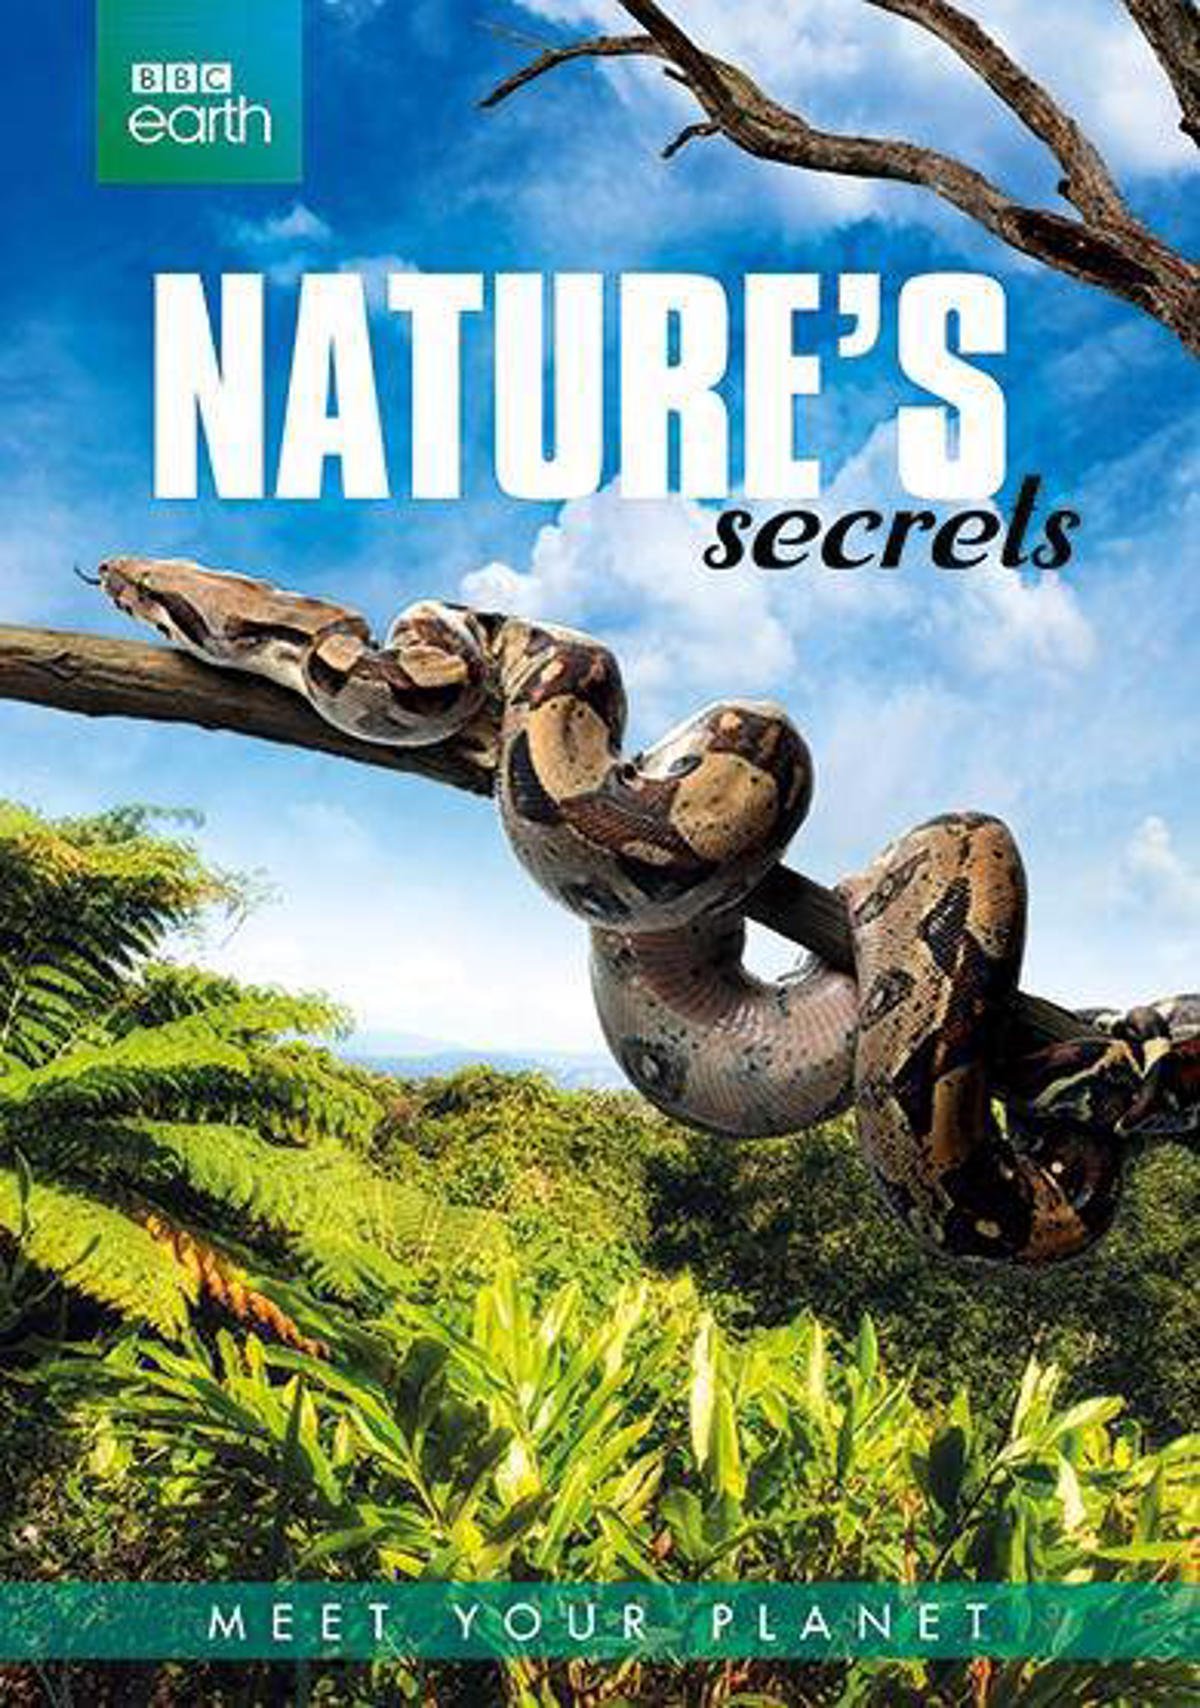 BBC Earth Nature's Secrets (DVD) wehkamp